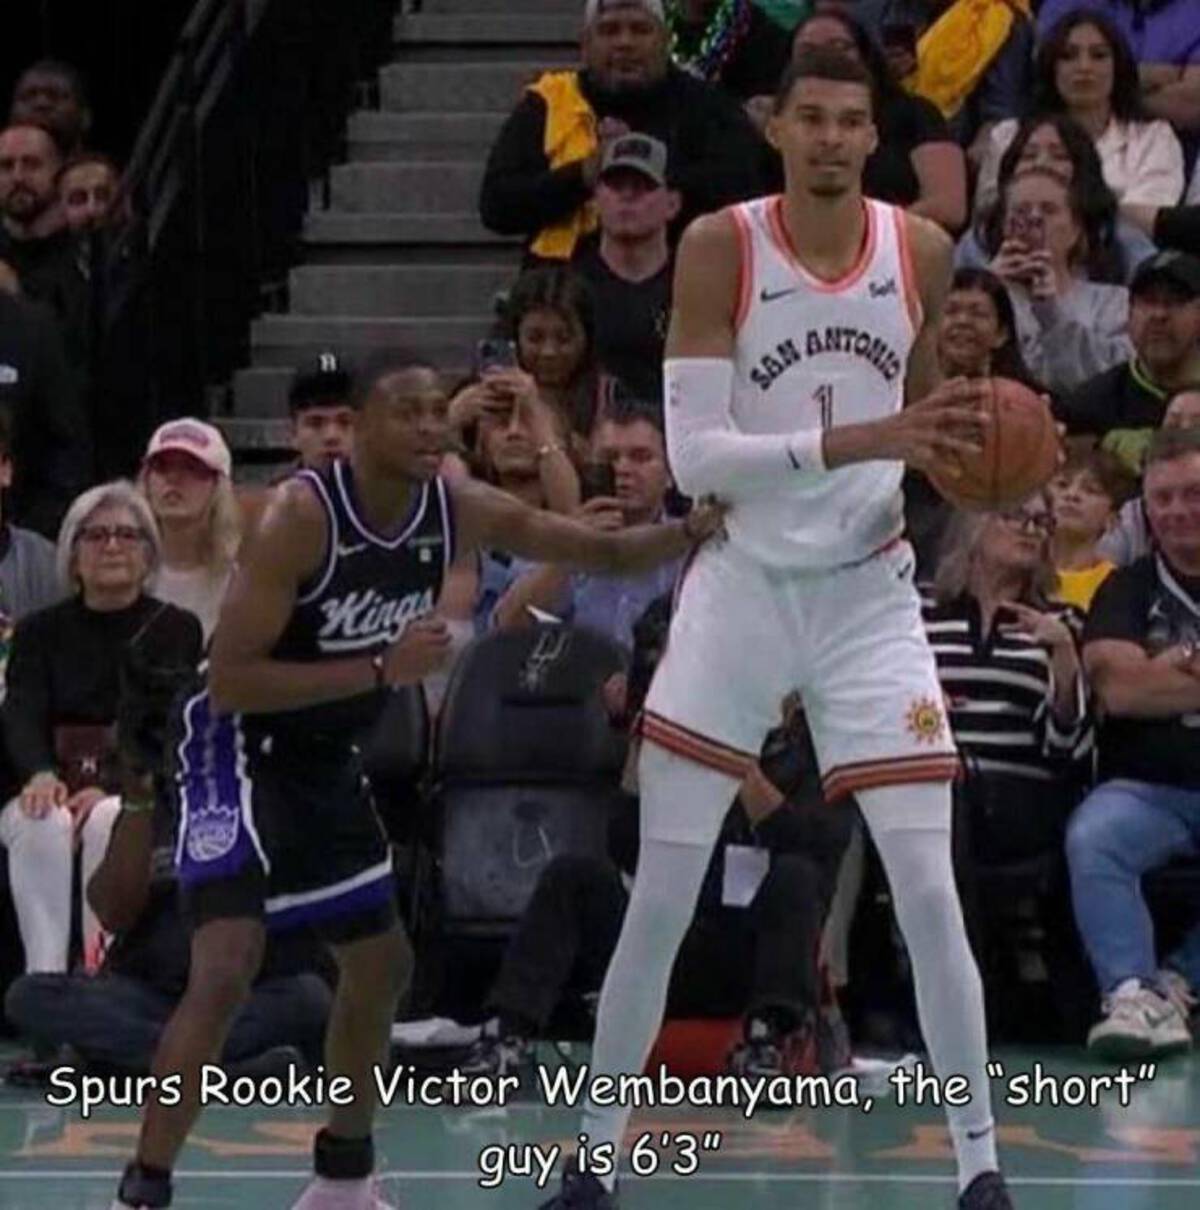 basketball player - T Kings San Antonio Spurs Rookie Victor Wembanyama, the "short" guy is 6'3"